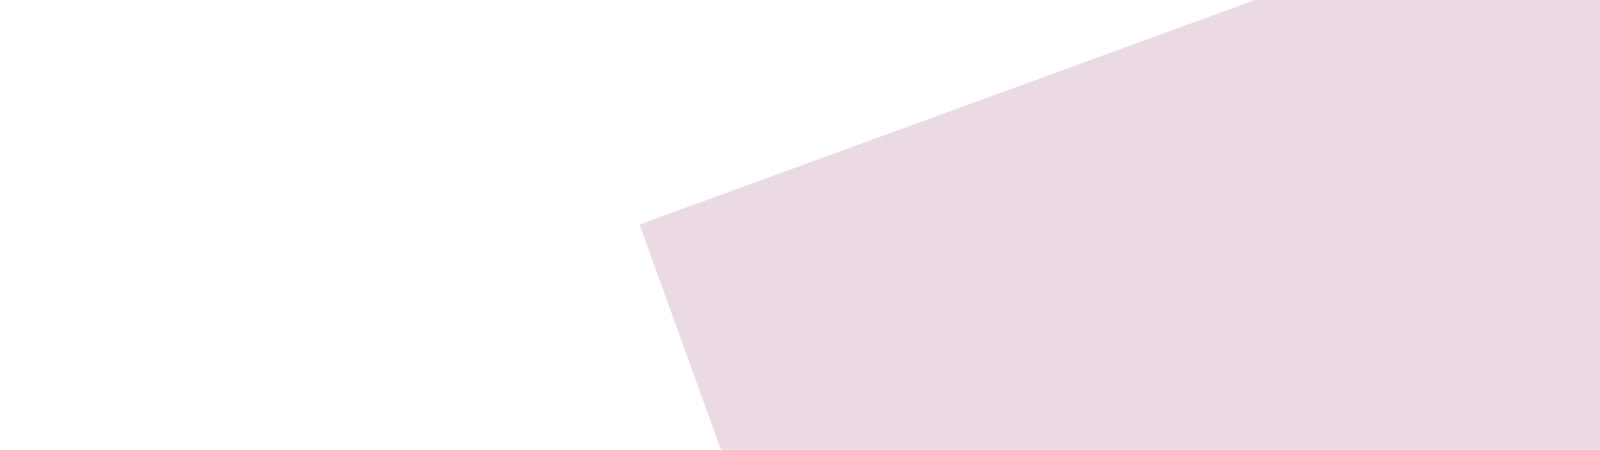 satch-card-bkg-light-greyish-pink-xs